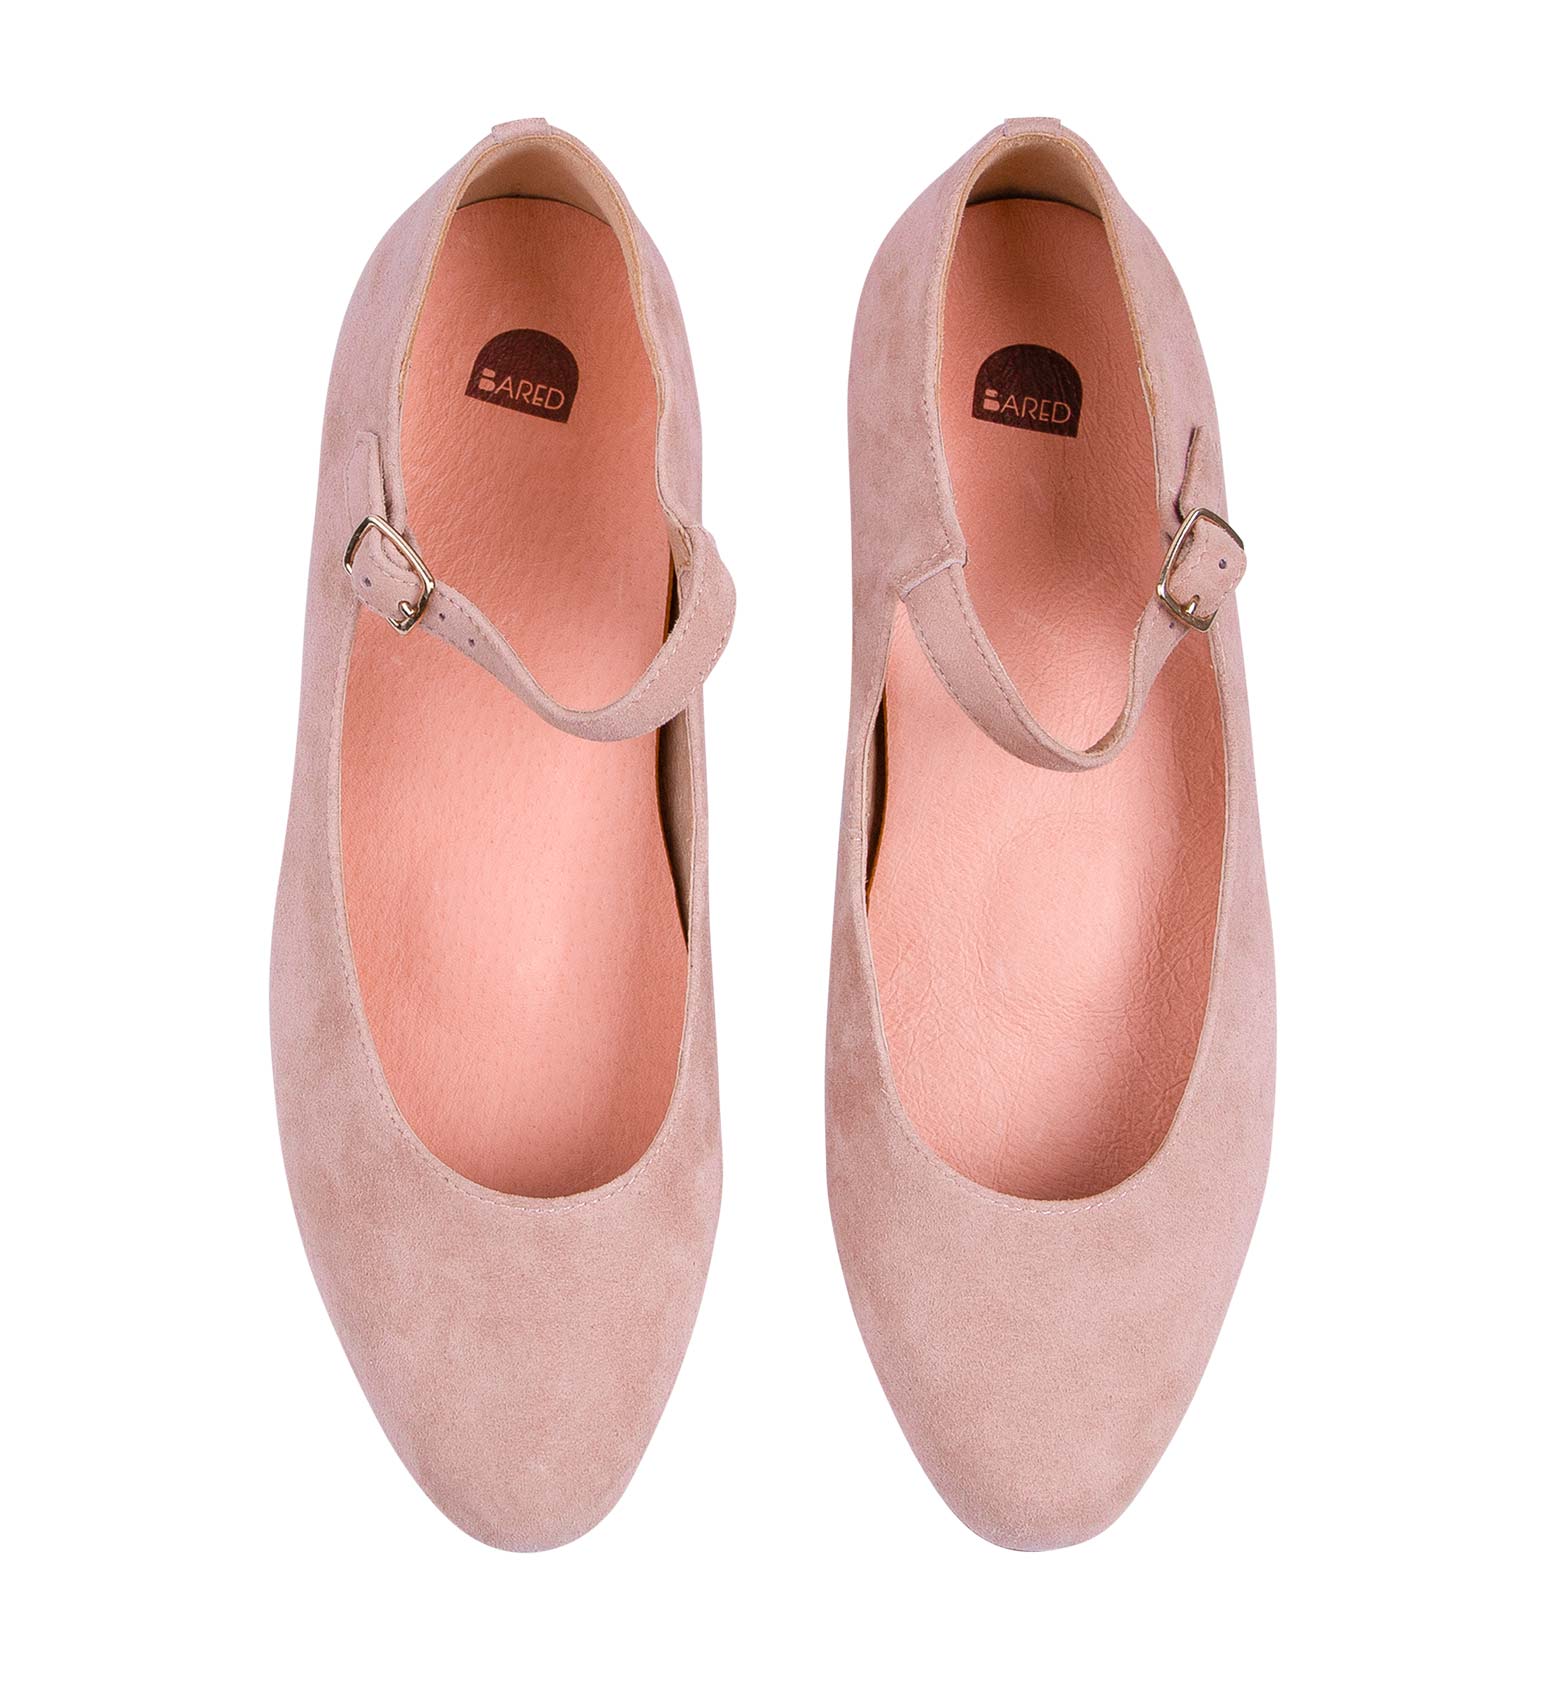 Quail Blush Pink Suede Ballet Flats 